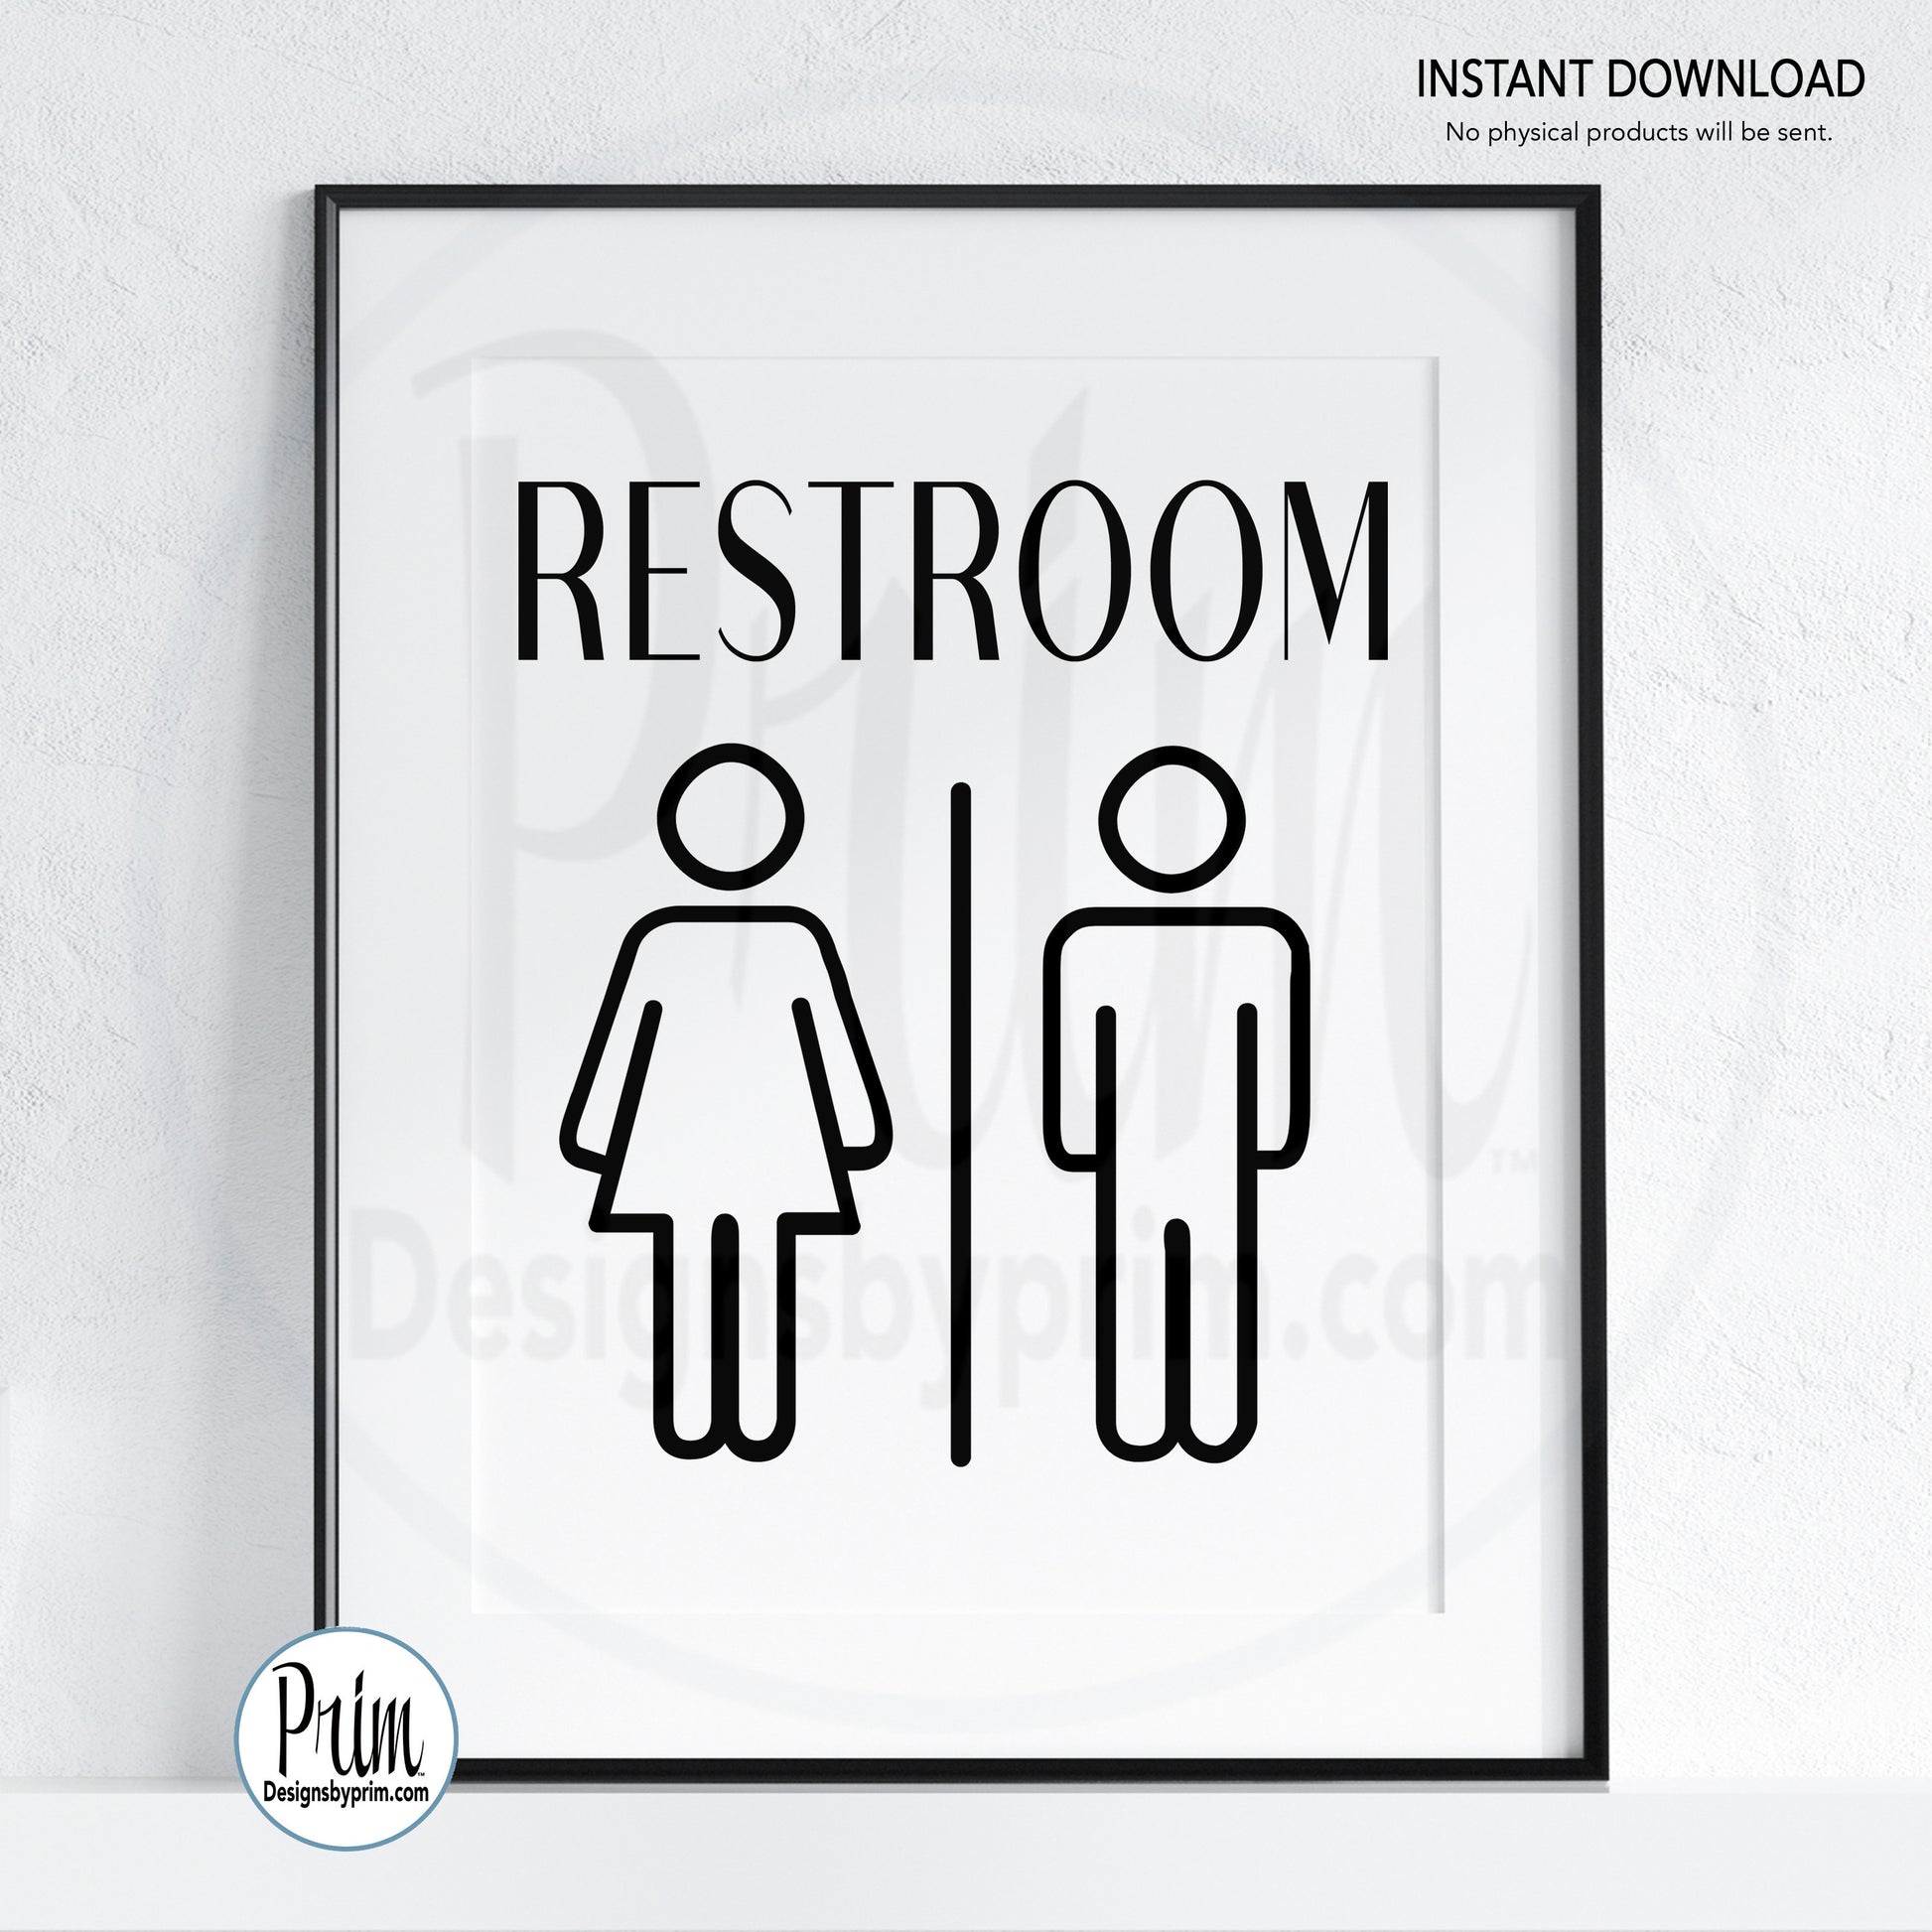 Designs by Prim Designs by Prim Restroom Door Printable Door Sign Bathroom Unisex All Genders Welcome Outhouse Washroom Office airbnb Bed and Breakfast Inn Hotel Download